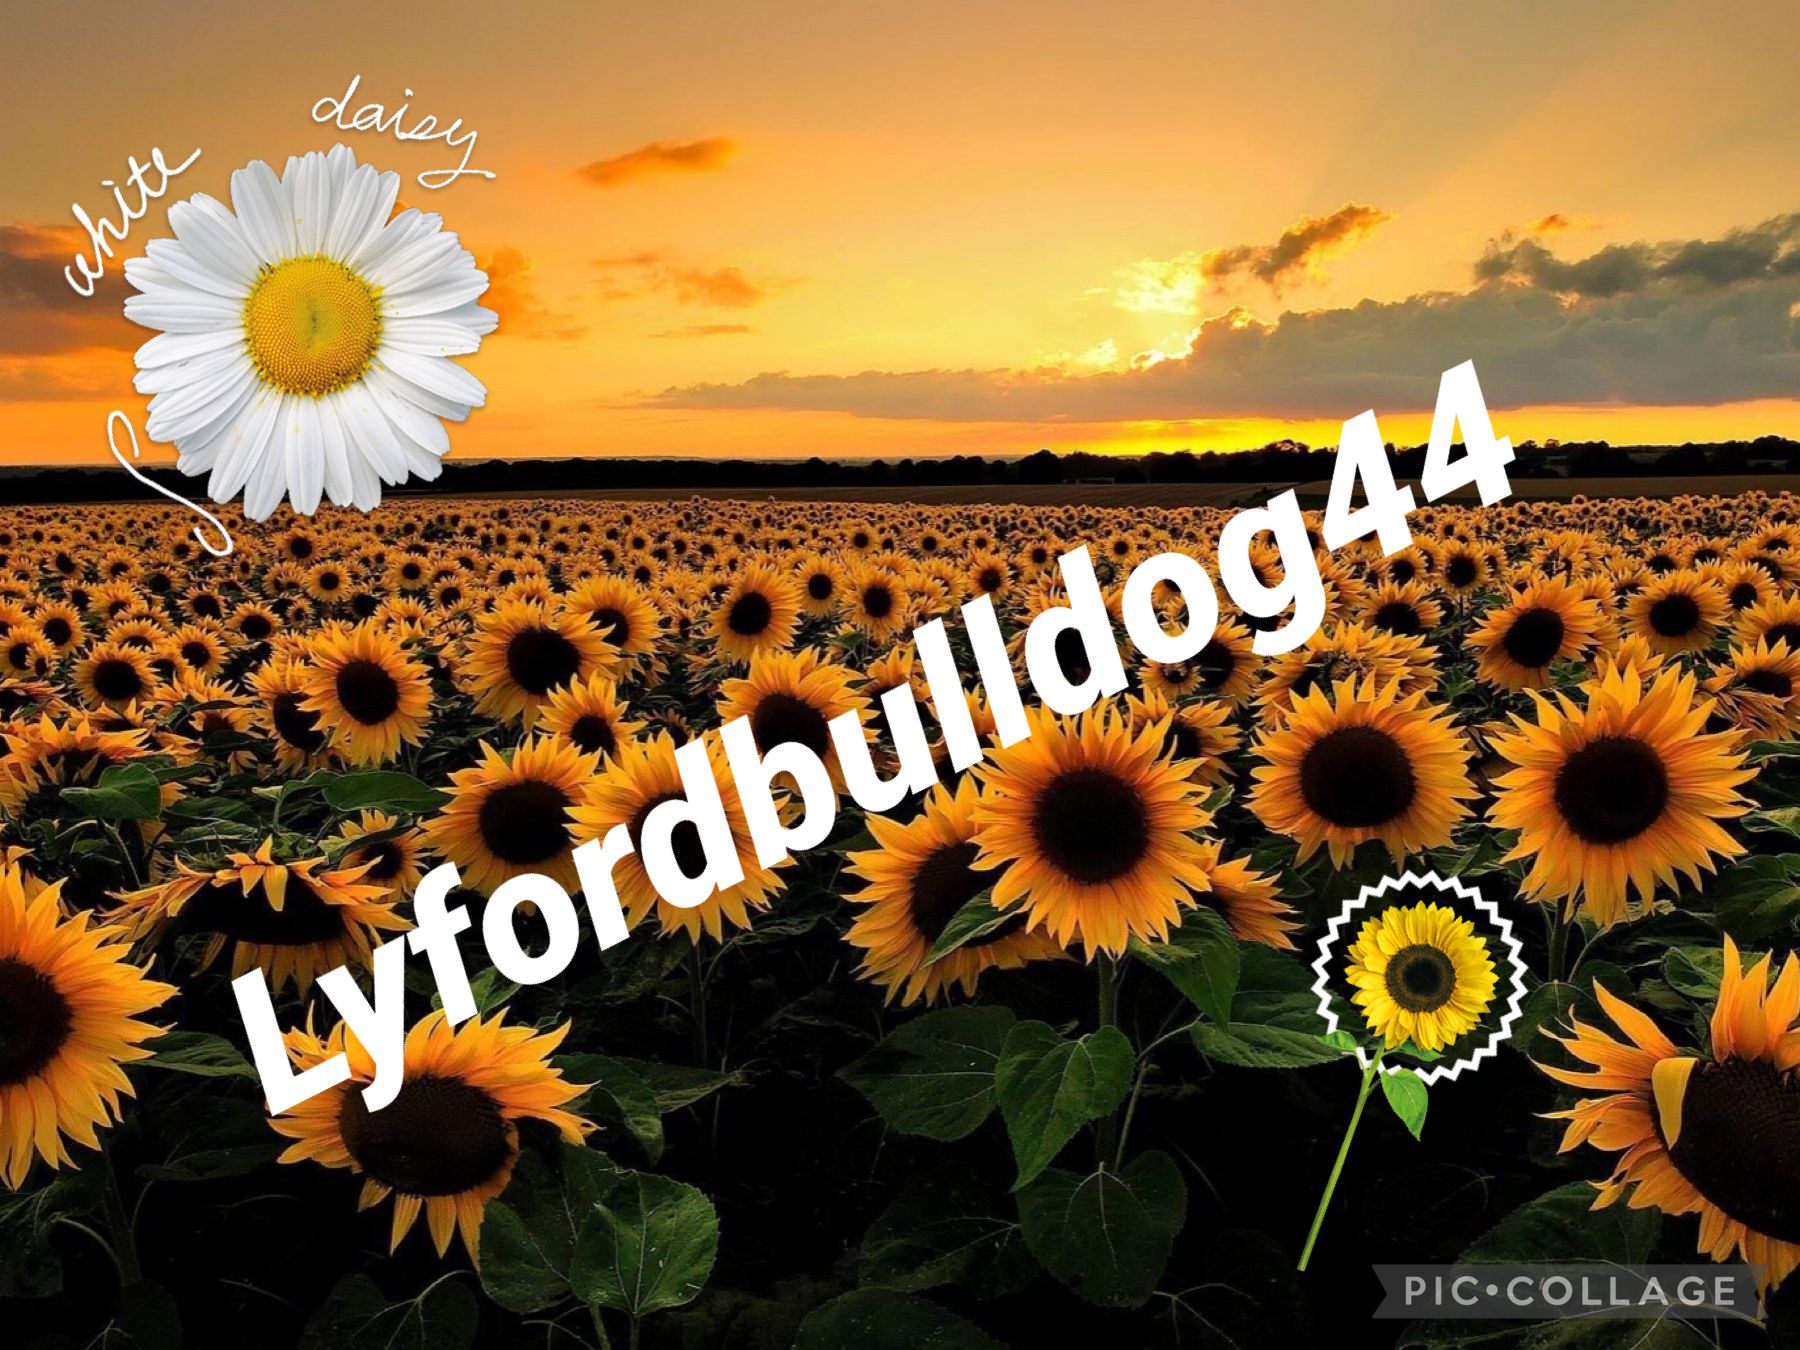 There you go lyfordbulldog44 